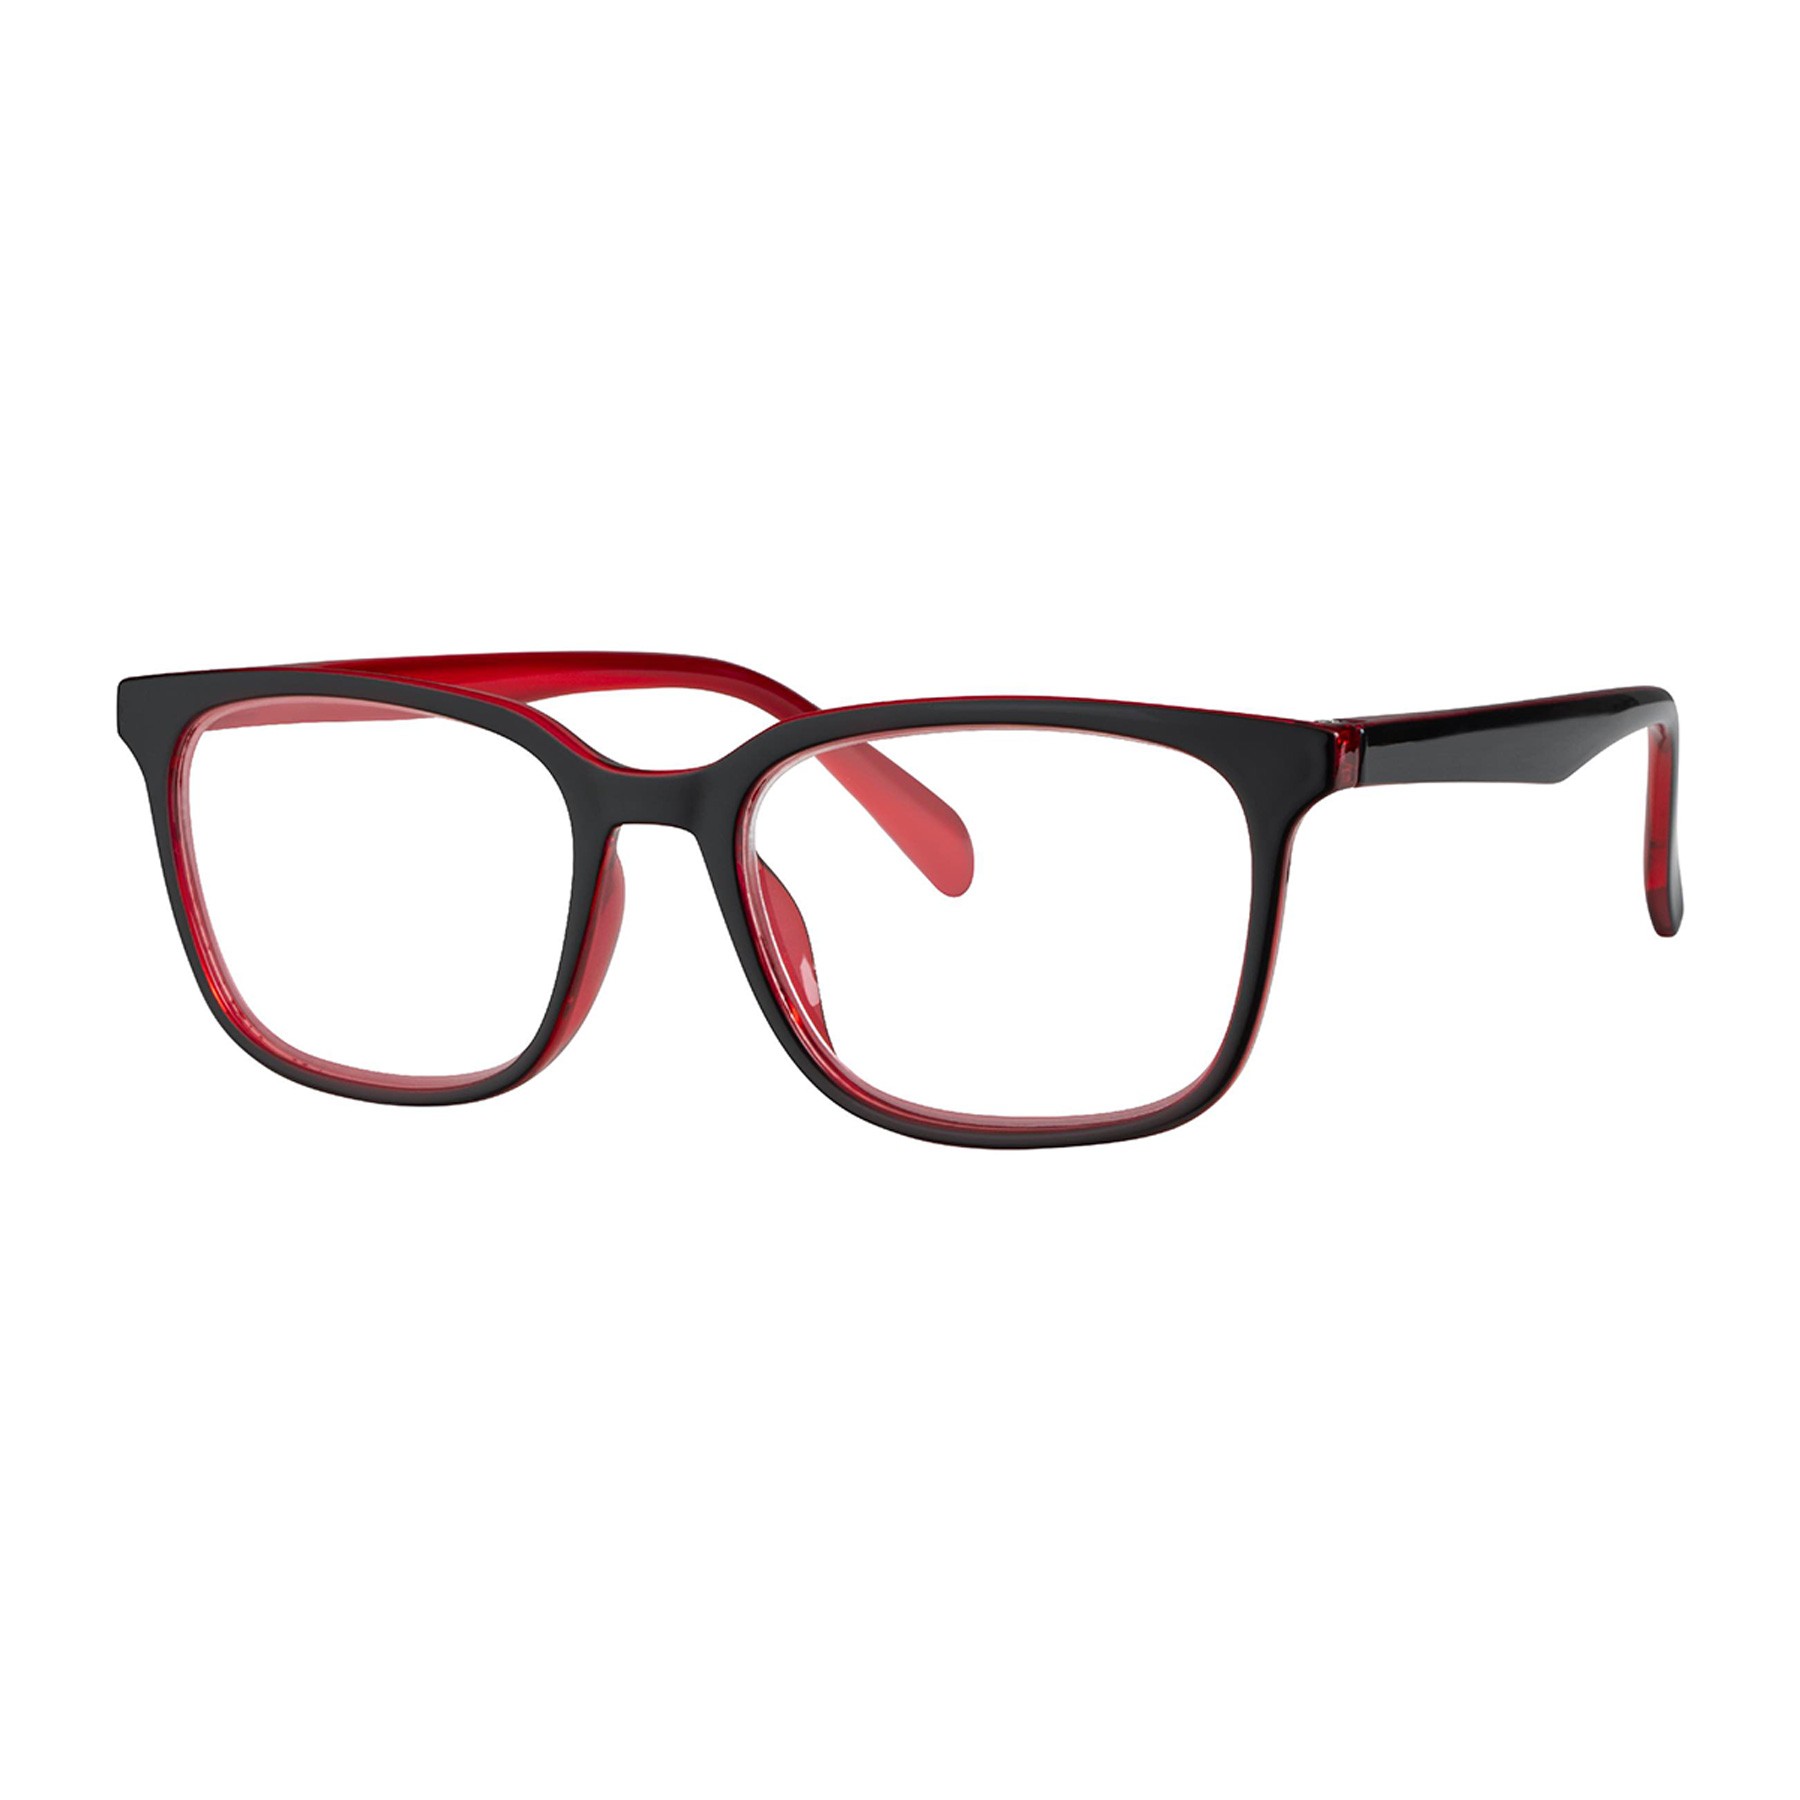 Iaview gafa de presbicia CANYON roja +1,50